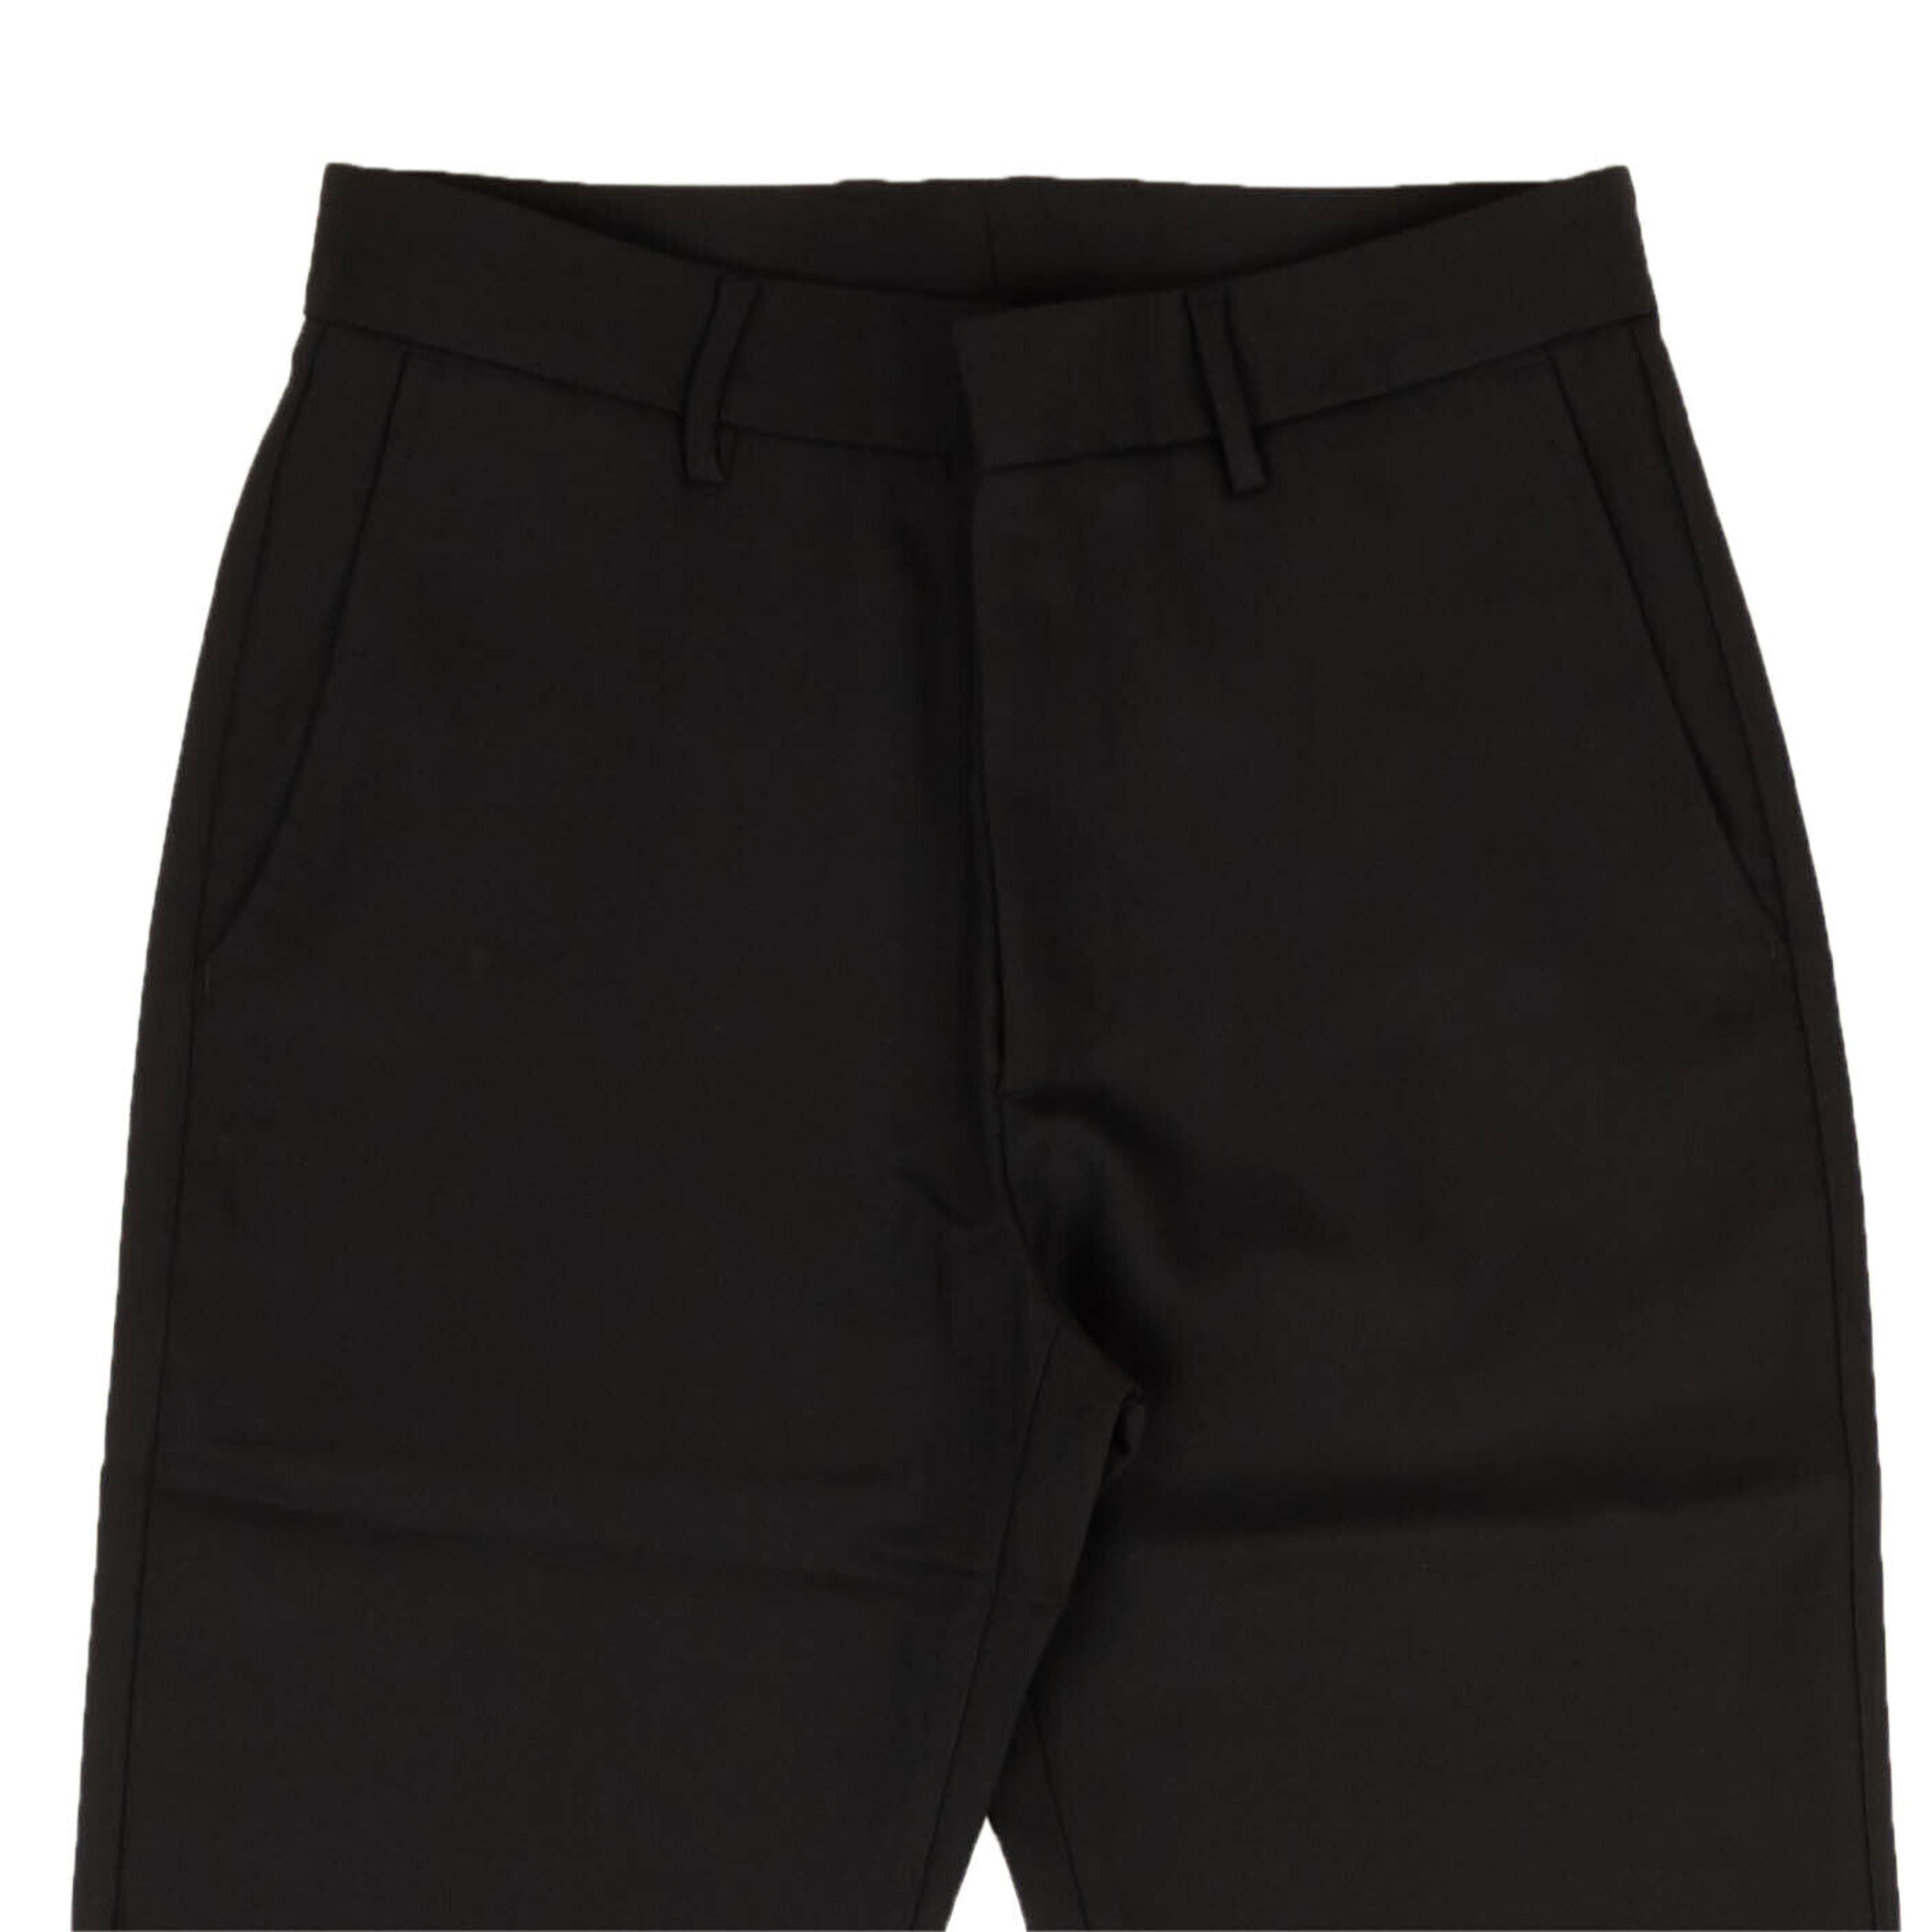 Alternate View 2 of 424 On Fairfax Wool Dress Pants - Black